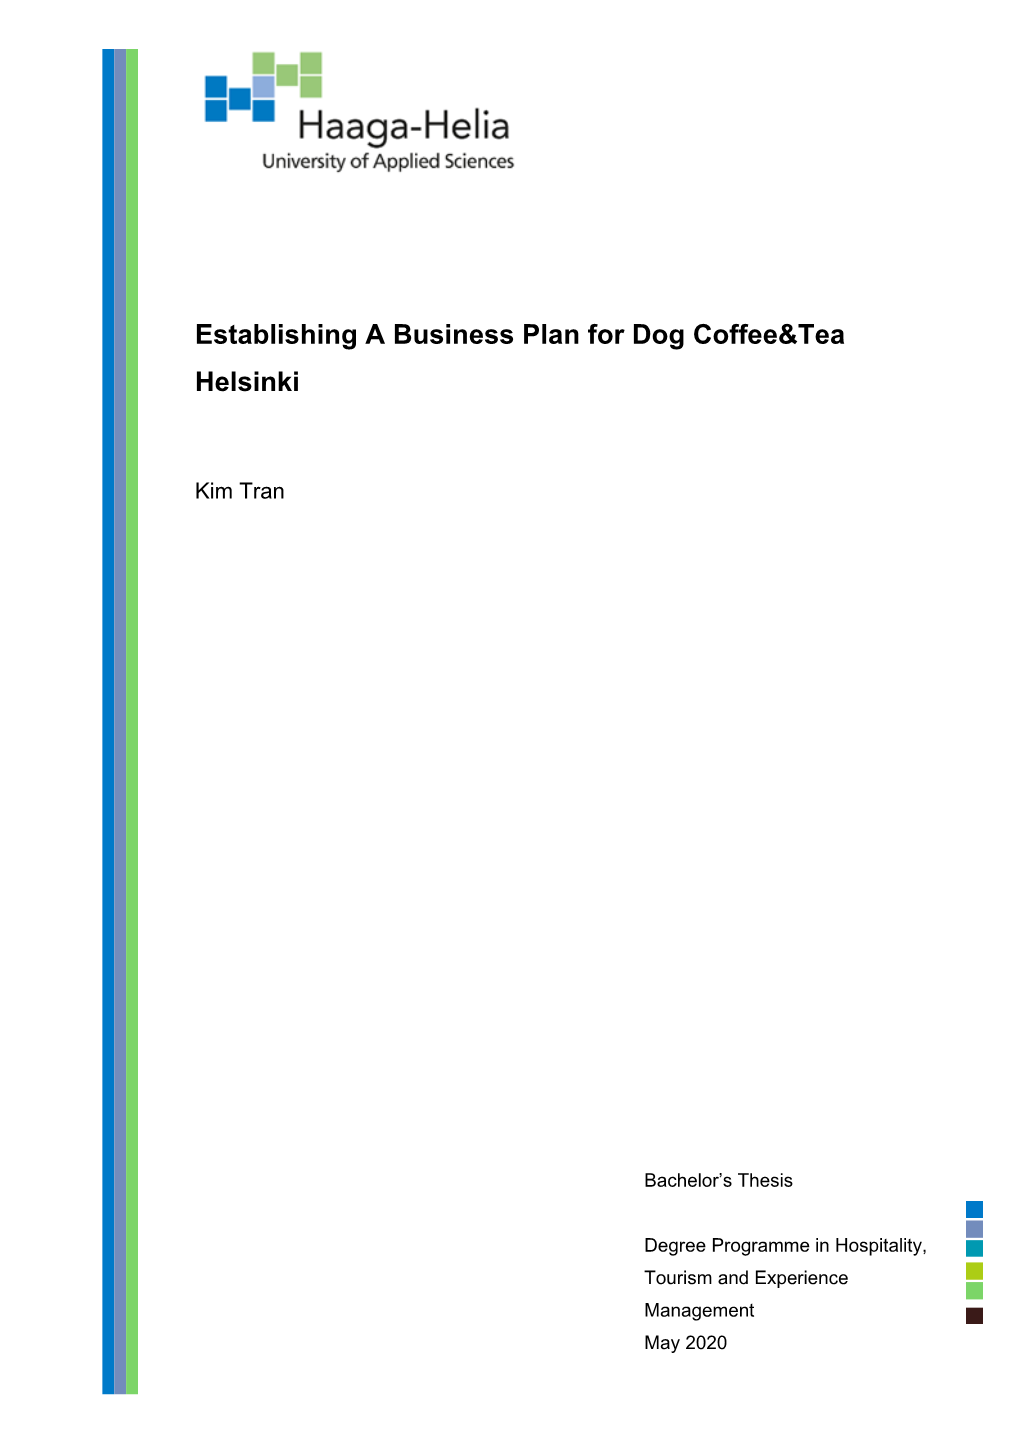 Establishing a Business Plan for Dog Coffee&Tea Helsinki